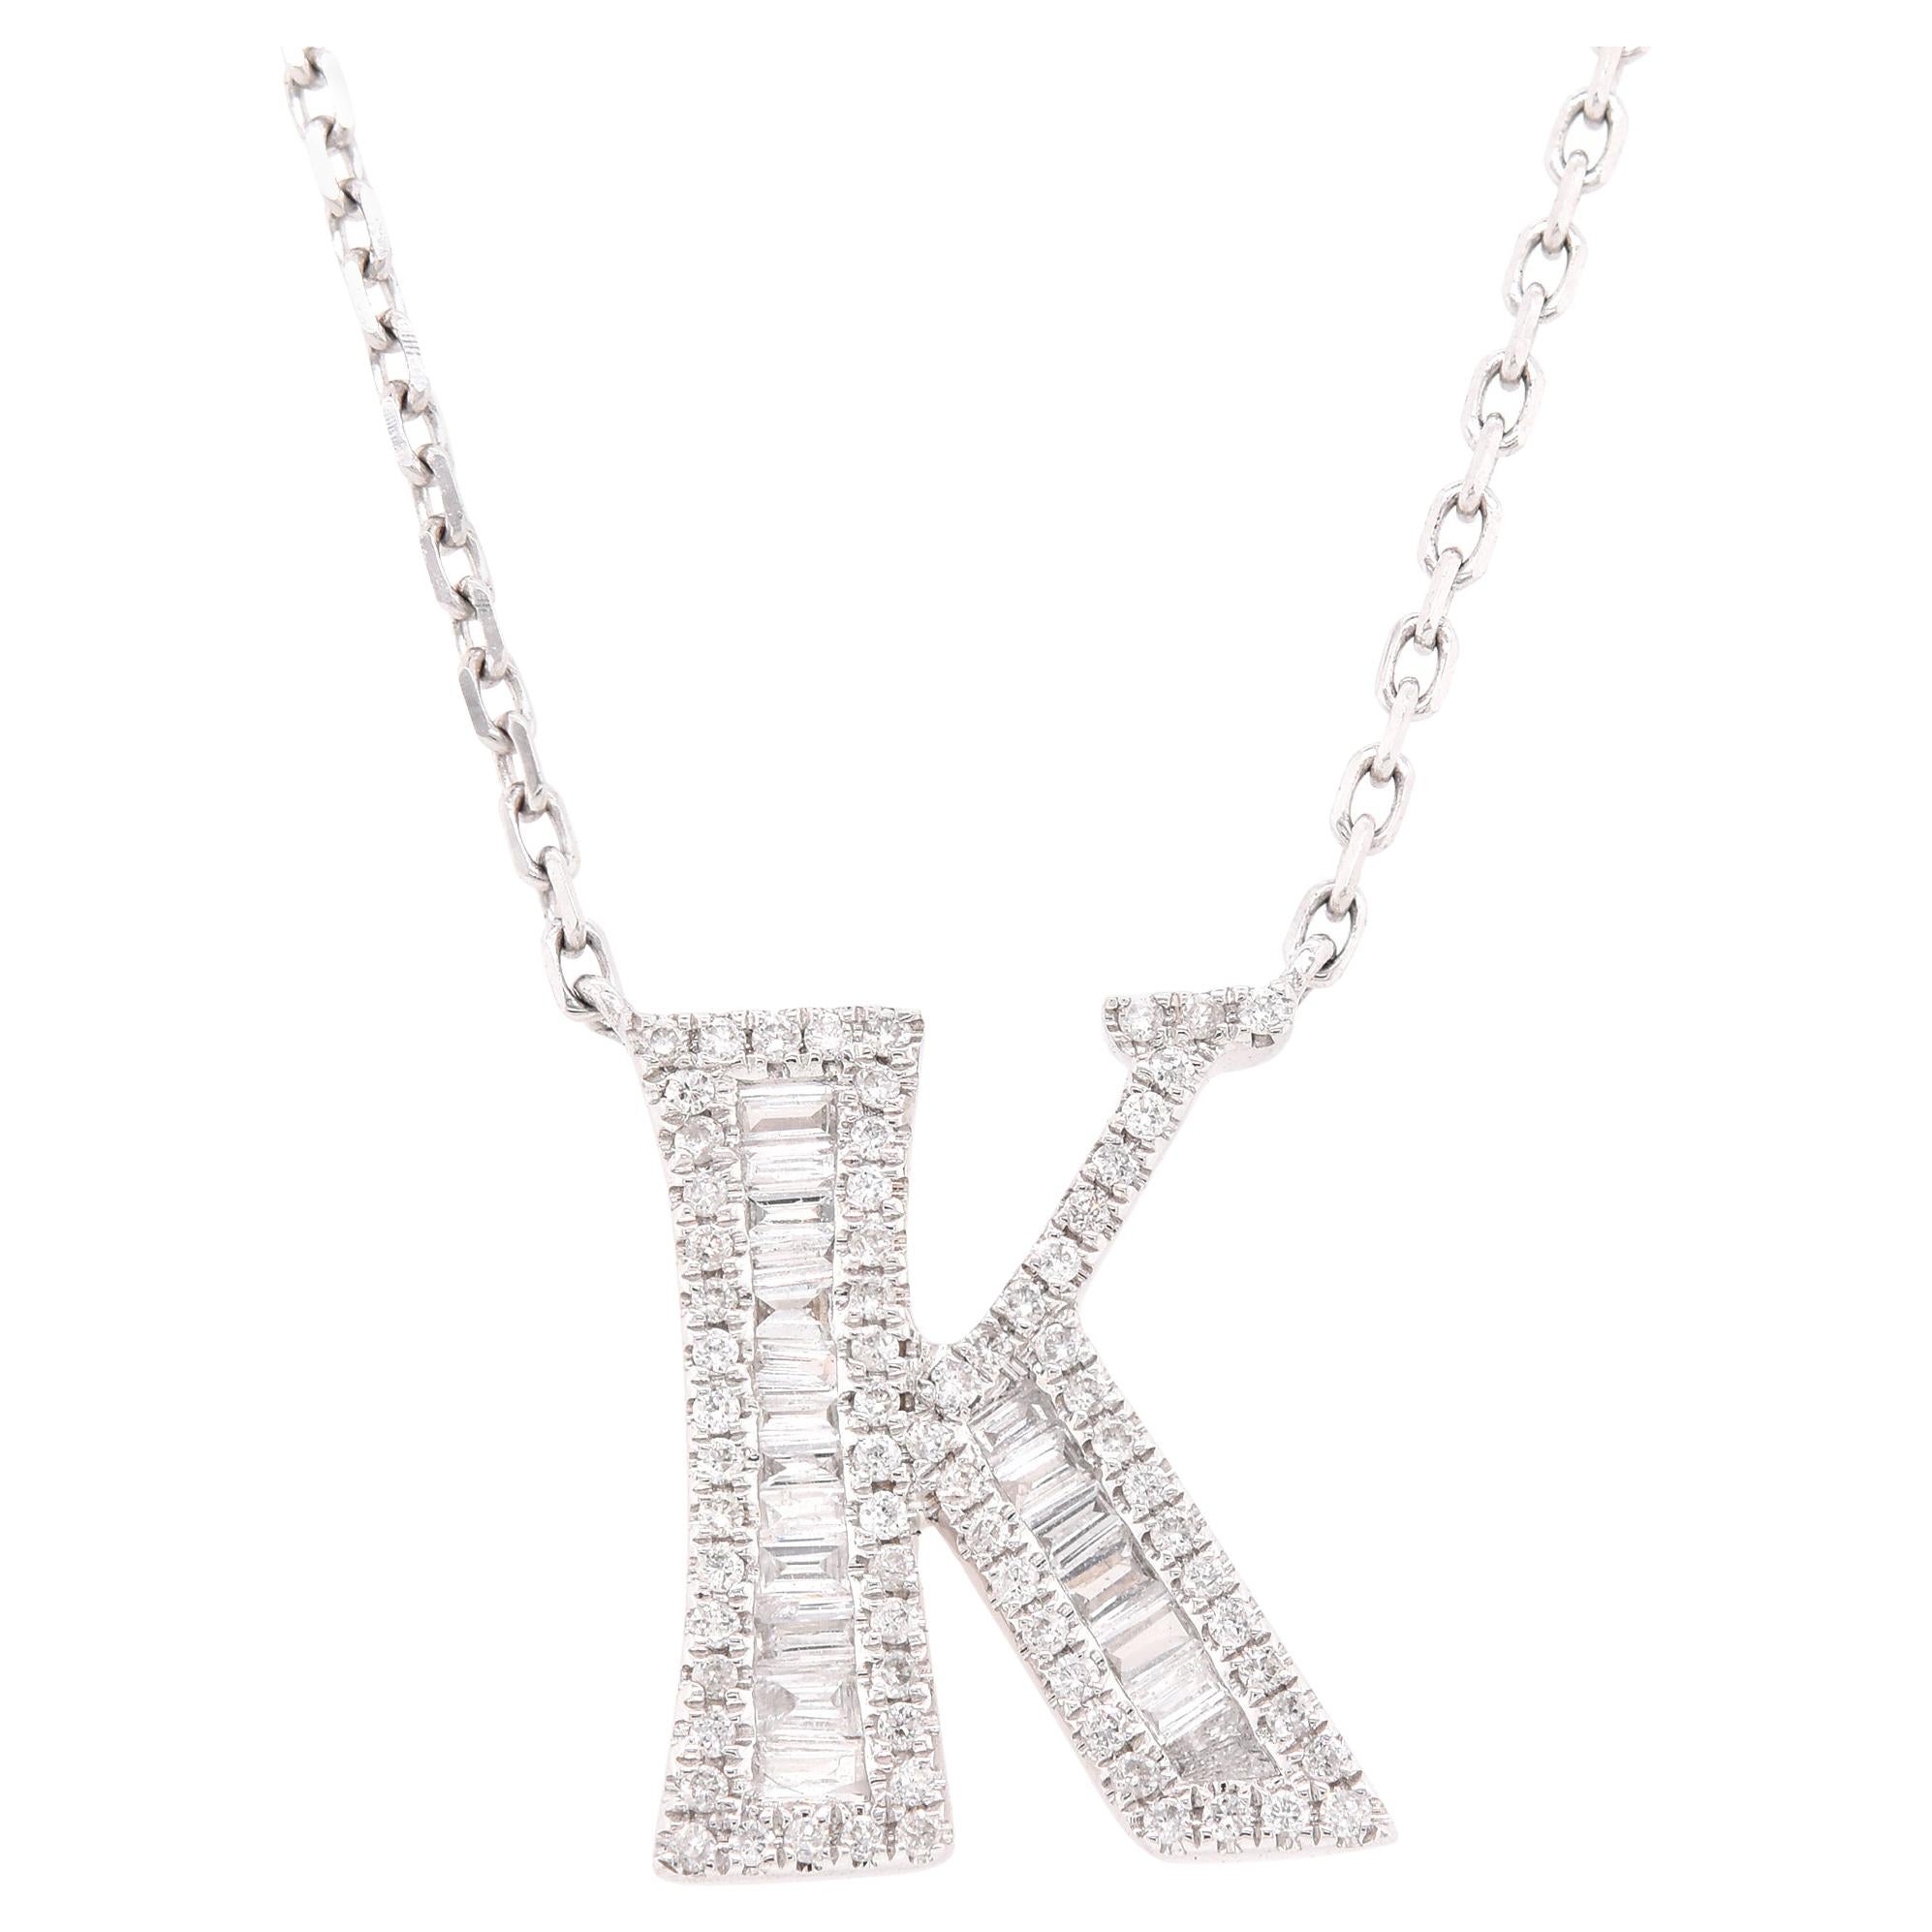 18 Karat White Gold Mosaic Set Diamond “K” Necklace